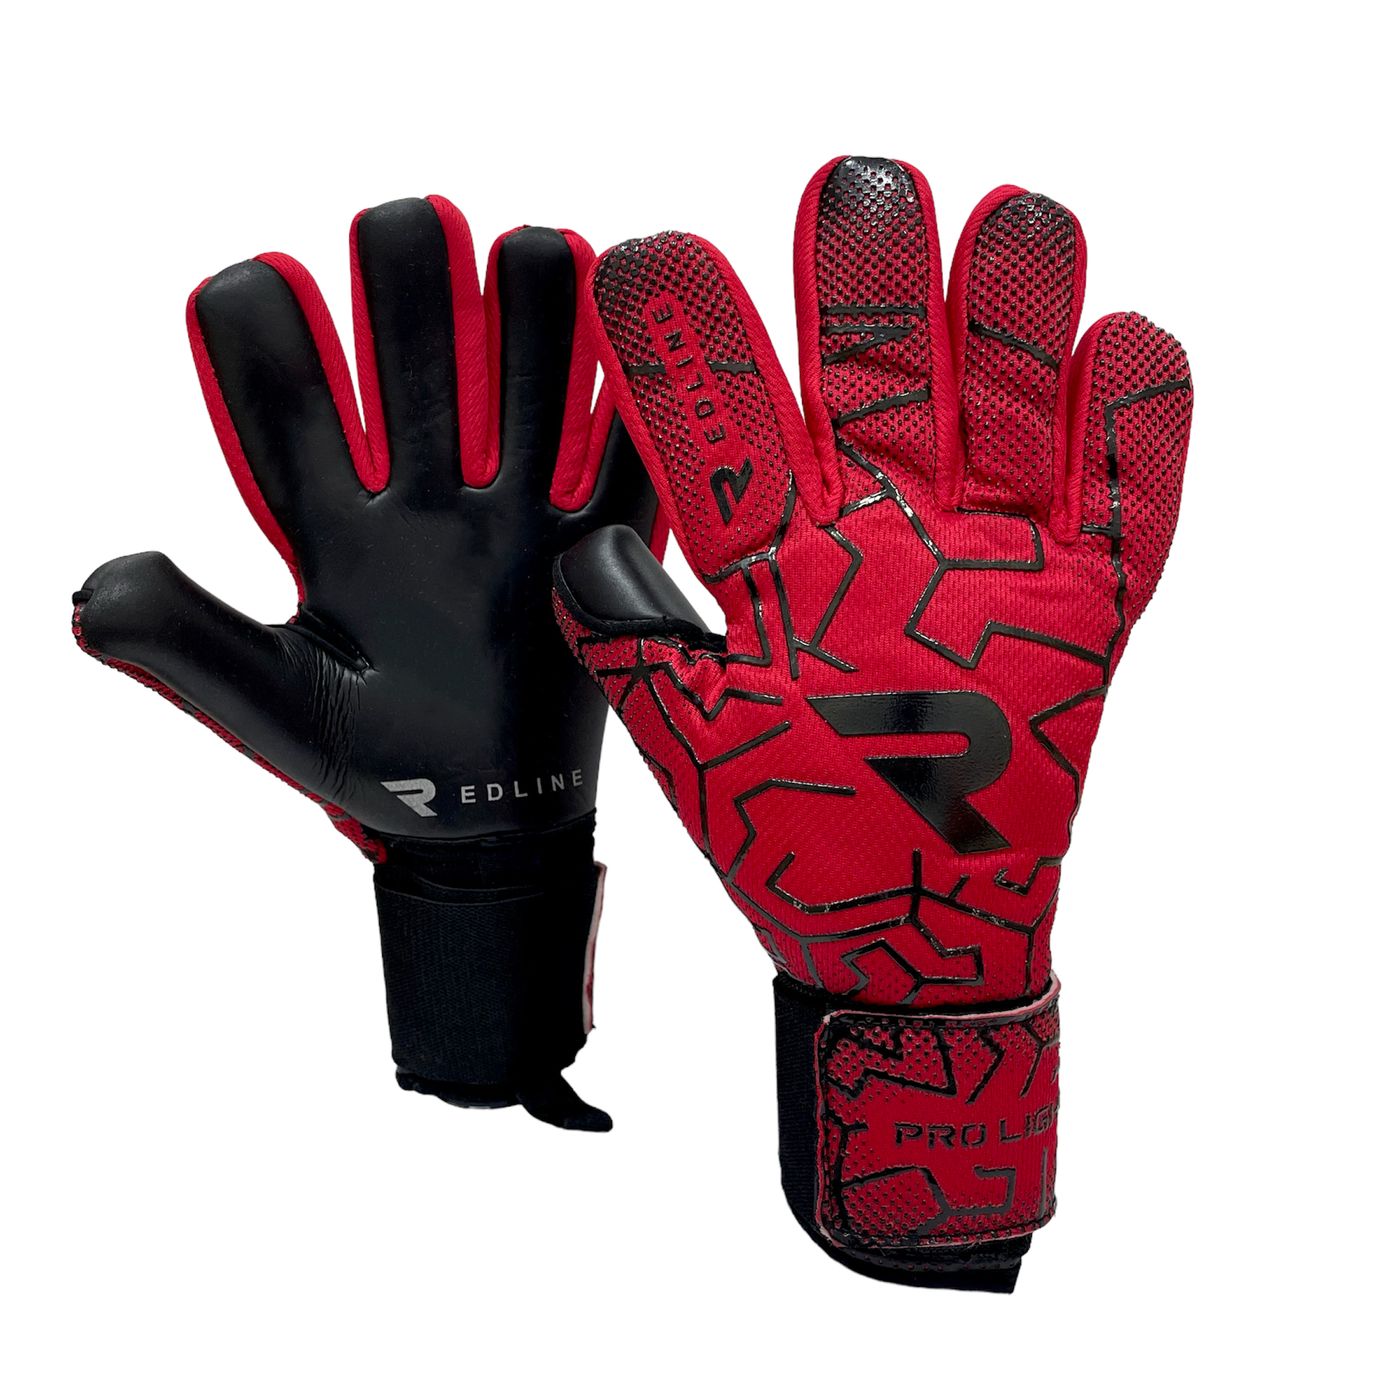 Вратарские перчатки Redline Pro Ligth Red Black купить